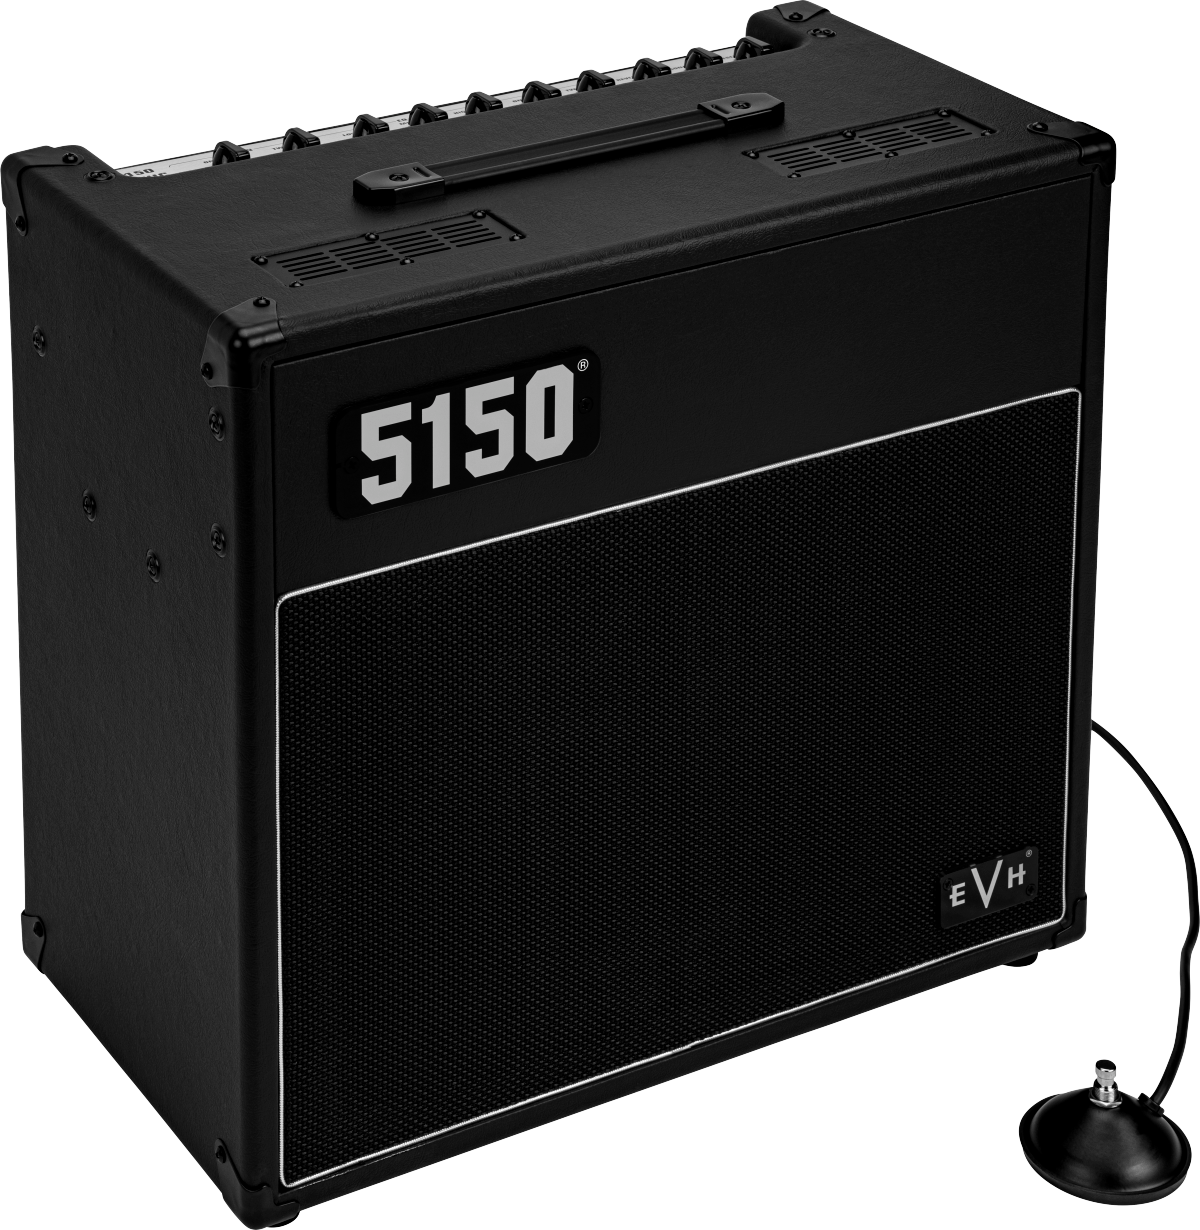 EVH 5150 Iconic Series 15W 1x10 Combo Amplifier - Black